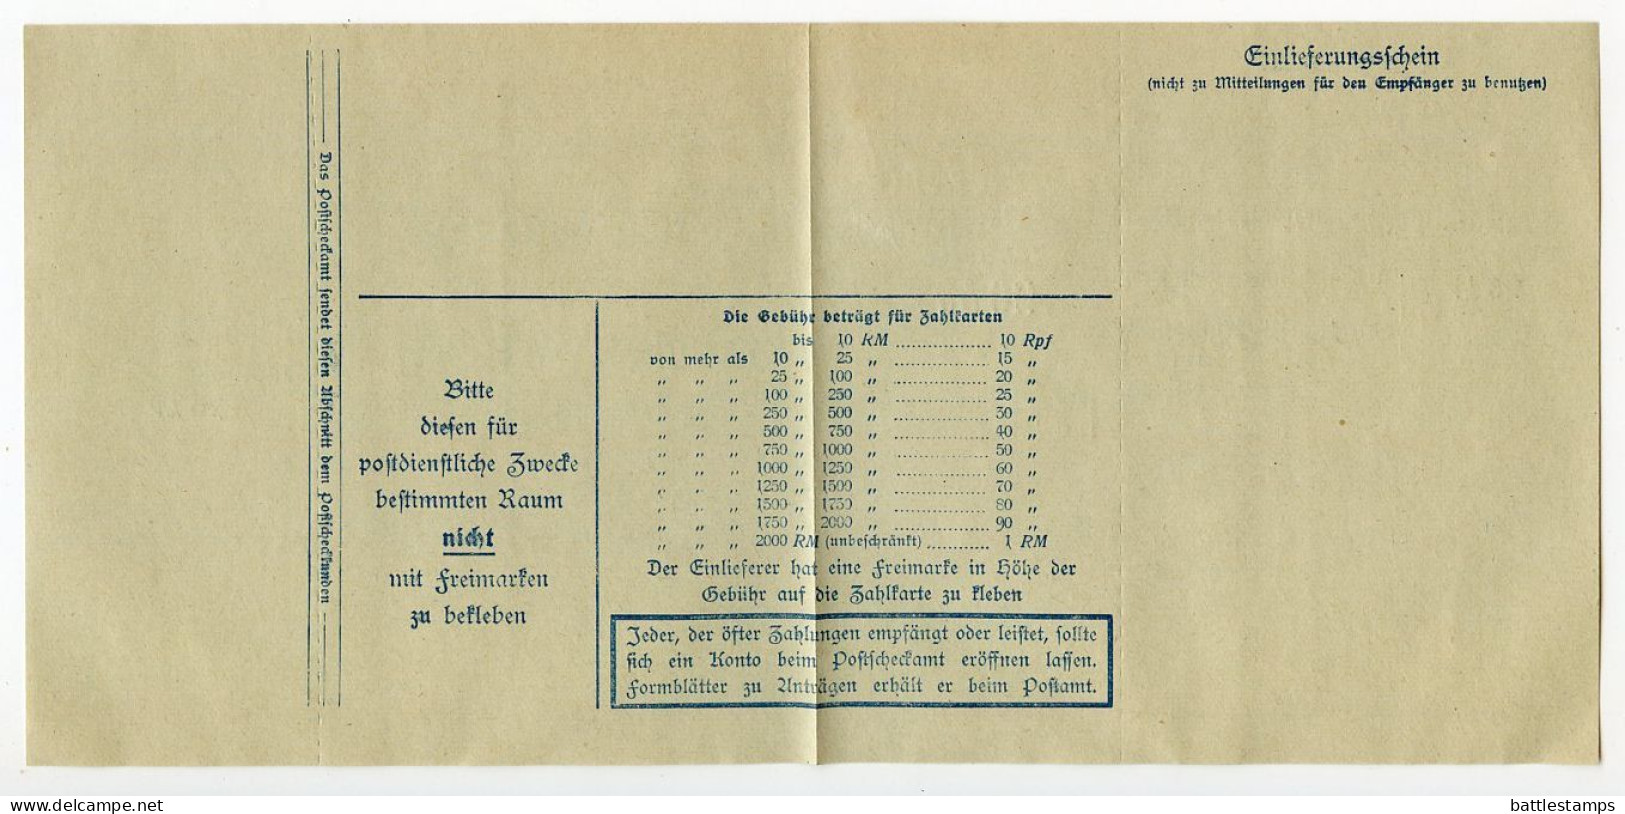 Germany 1934 Cover W/ Letter & Zahlkarte; Neuenkirchen (Kr. Melle) - Kreissparkasse Melle To Schiplage; 3pf. Hindenburg - Brieven En Documenten